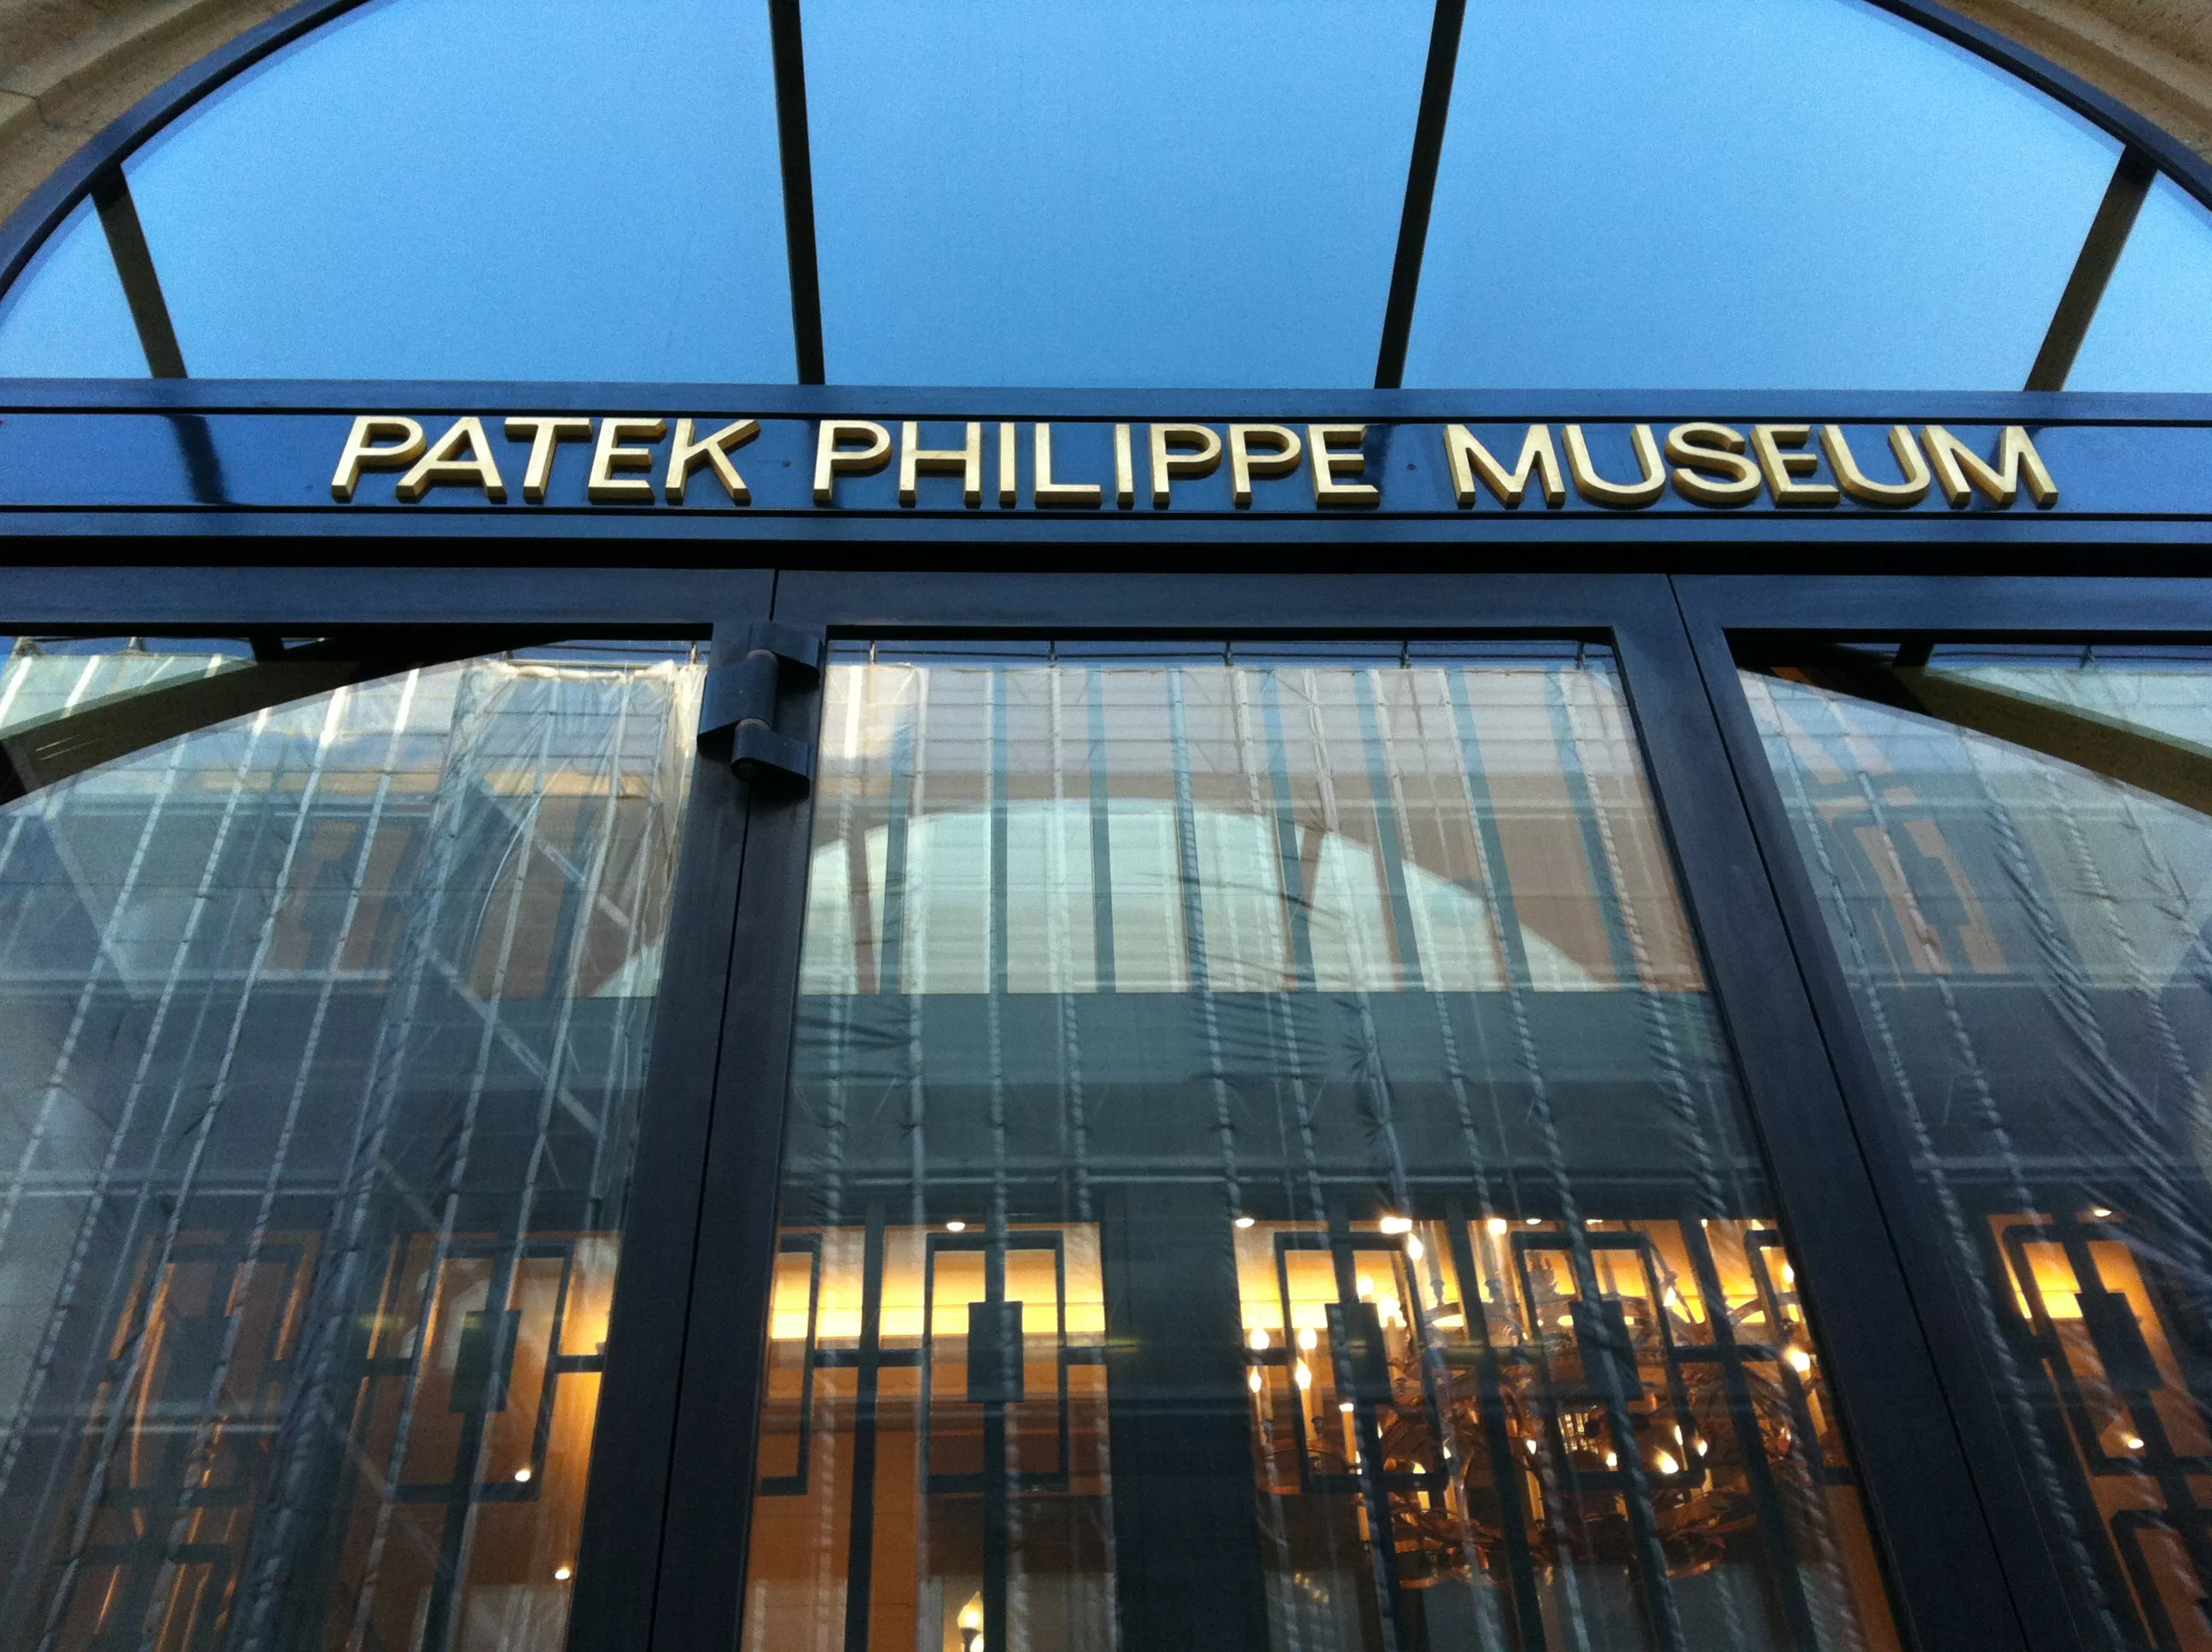 Patek Philippe Museum in Switzerland, Europe | Museums - Rated 3.6